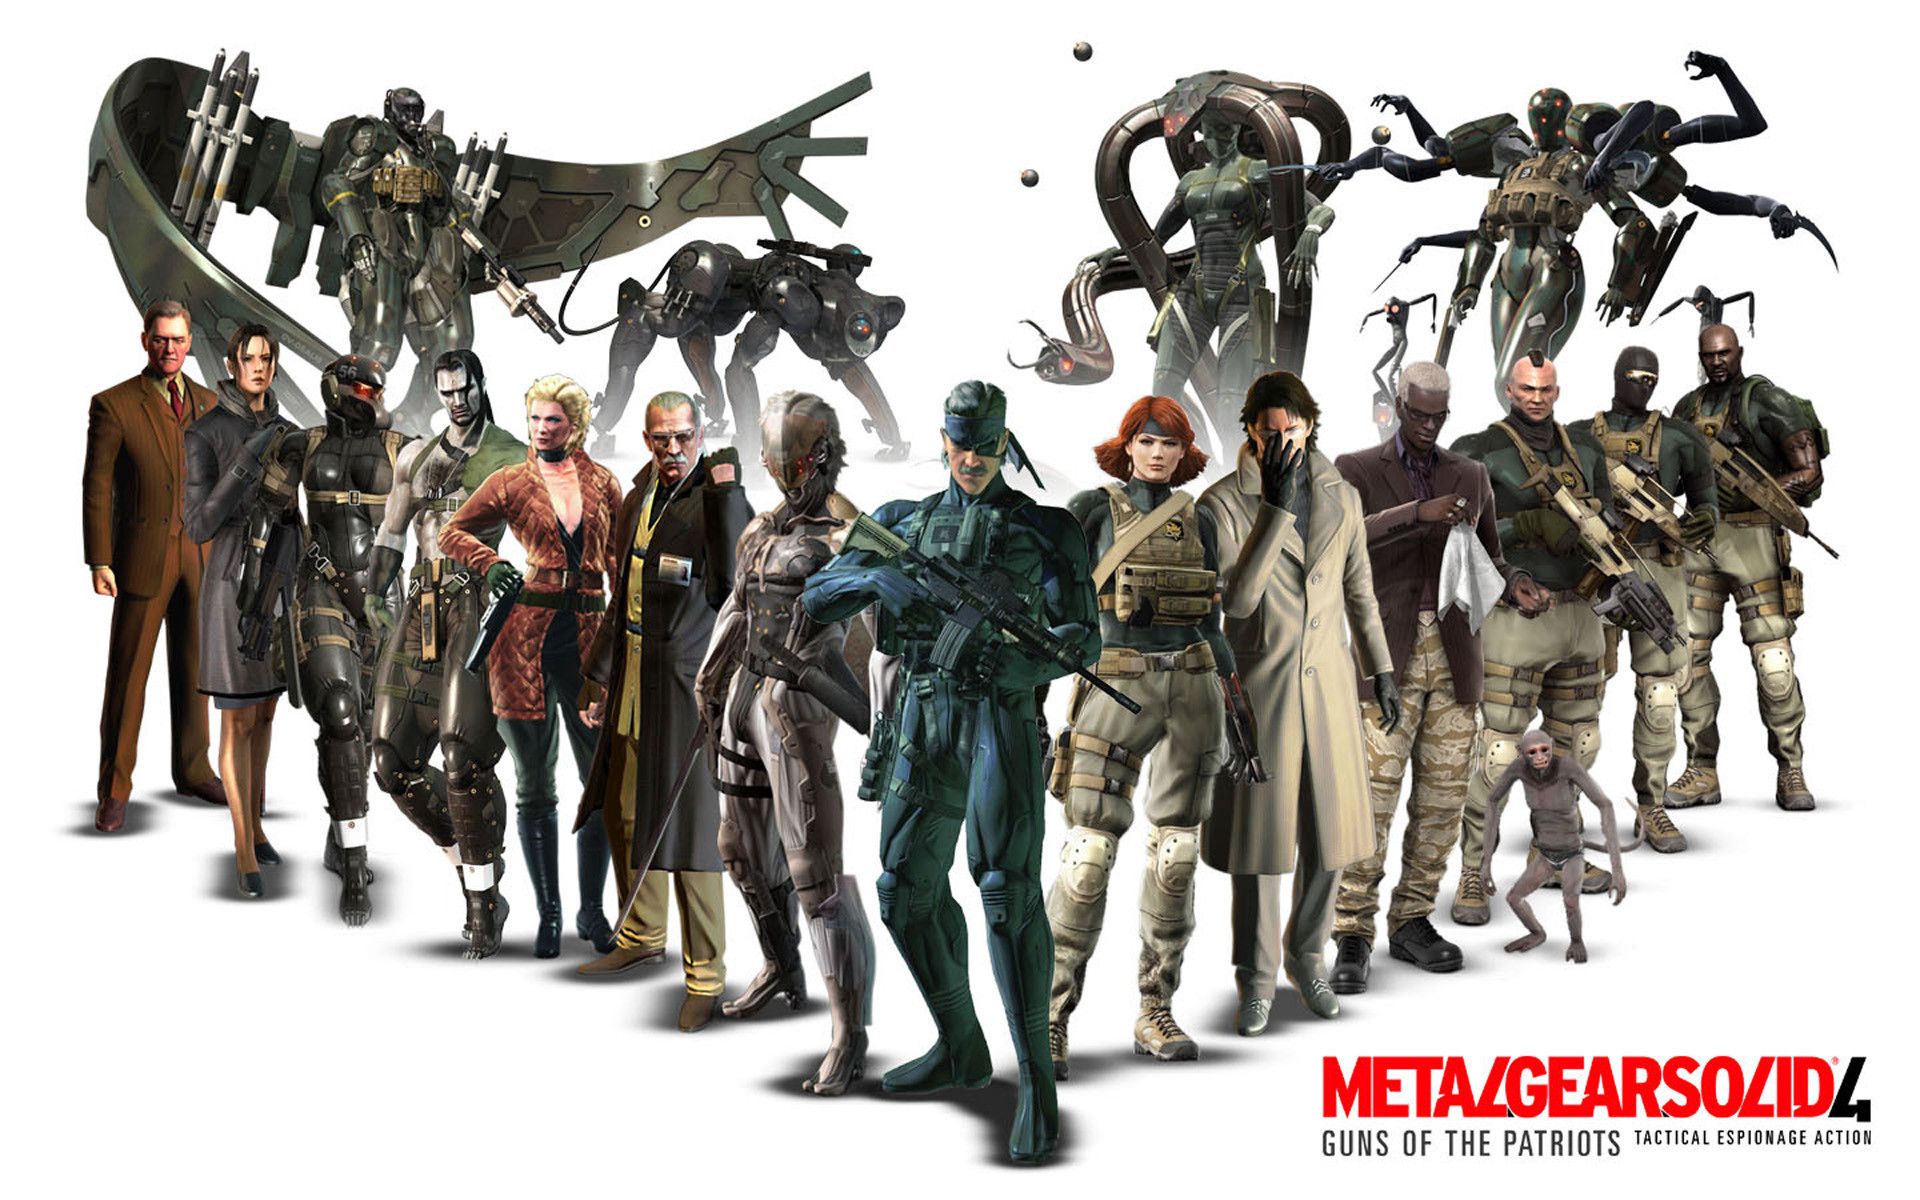 Metal Gear Solid Wallpapers HD - Wallpaper Cave